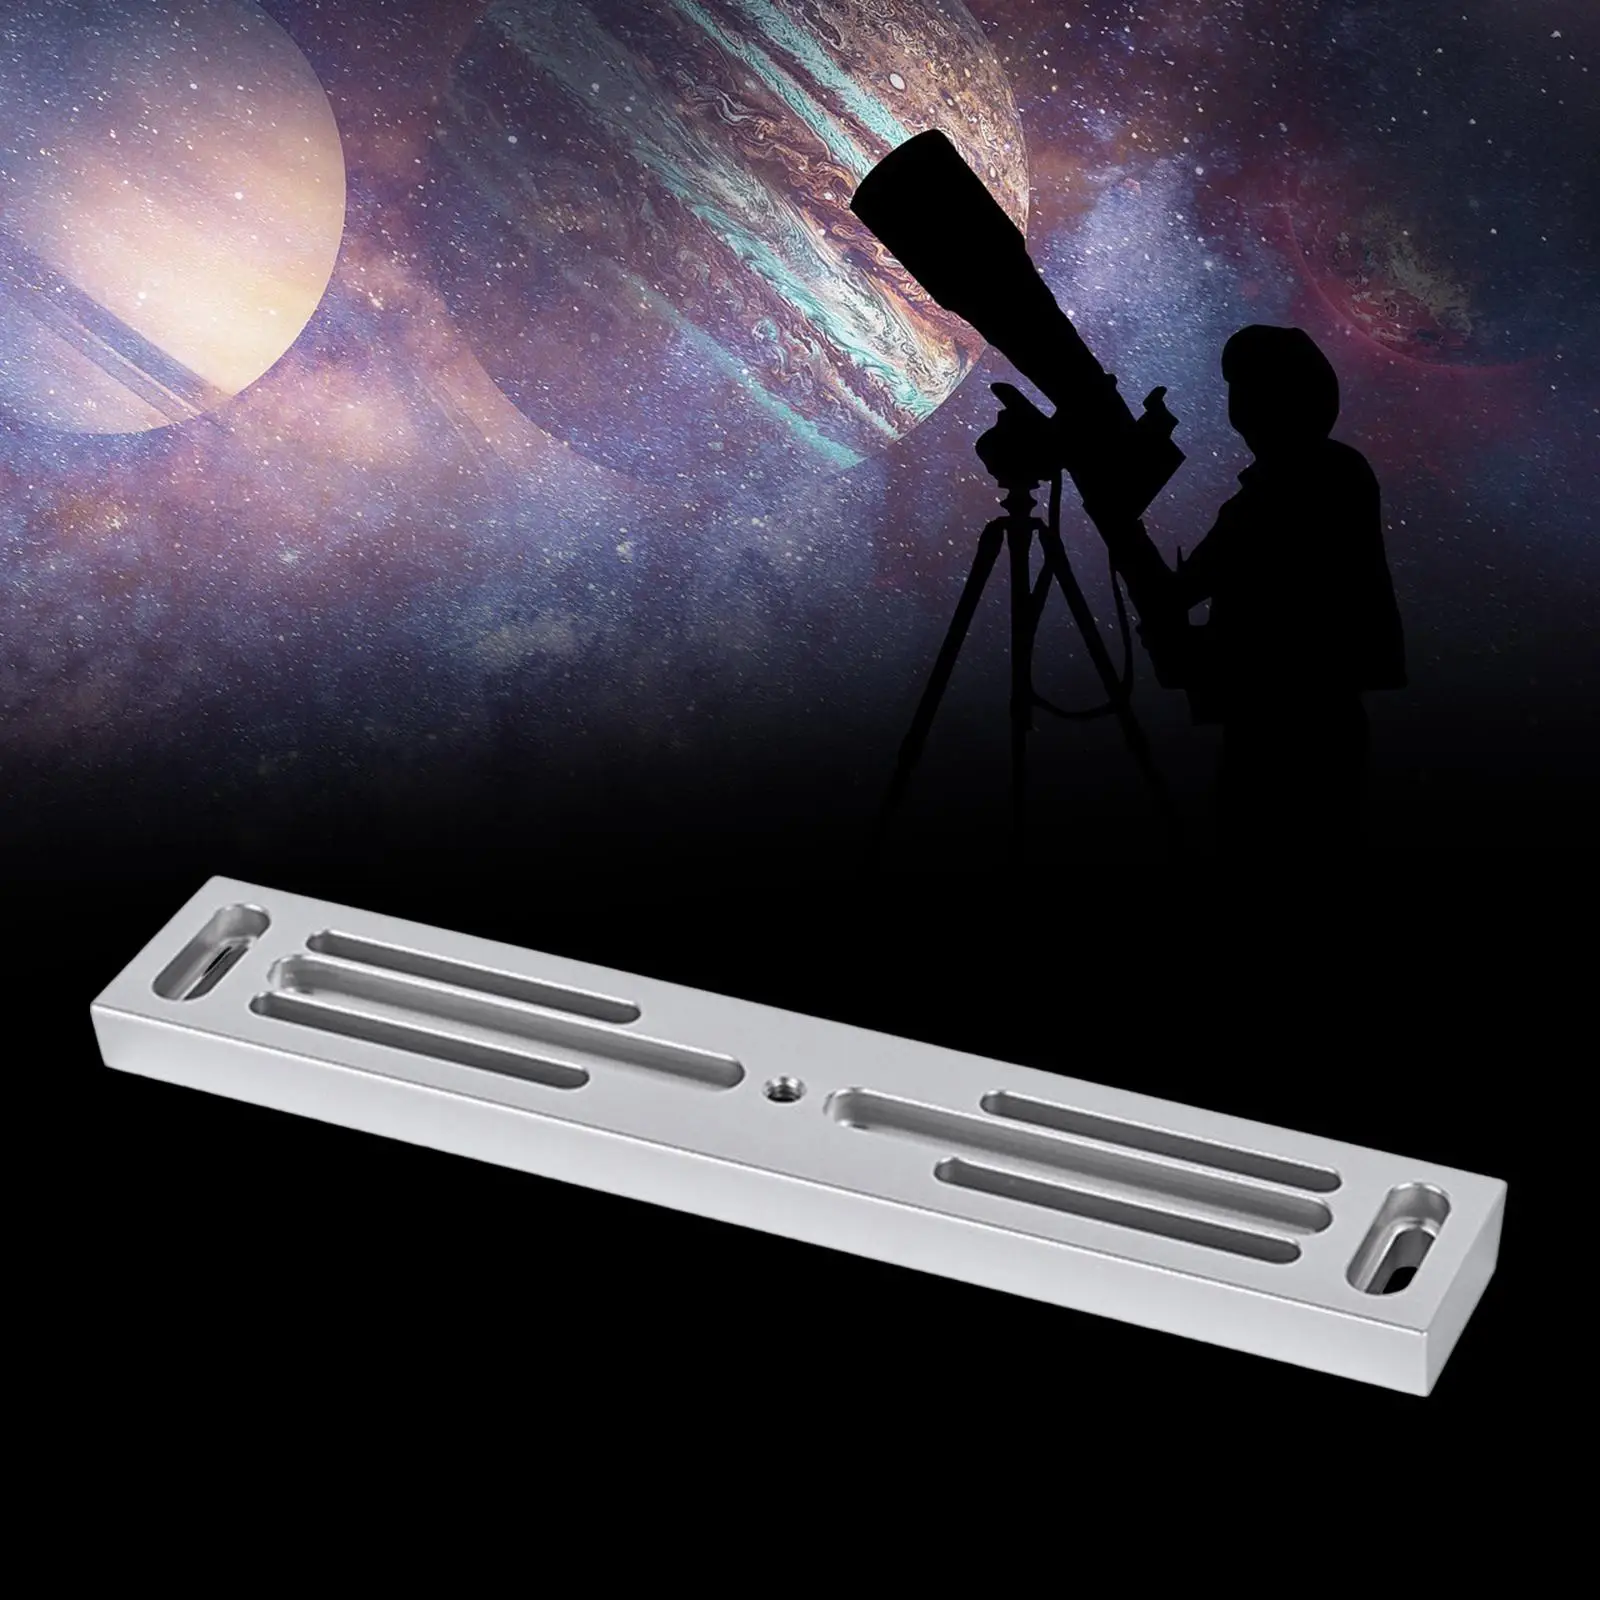 Telescope Dovetail Plate 228mm 9 inch Accessories Aluminum Alloy 1/4